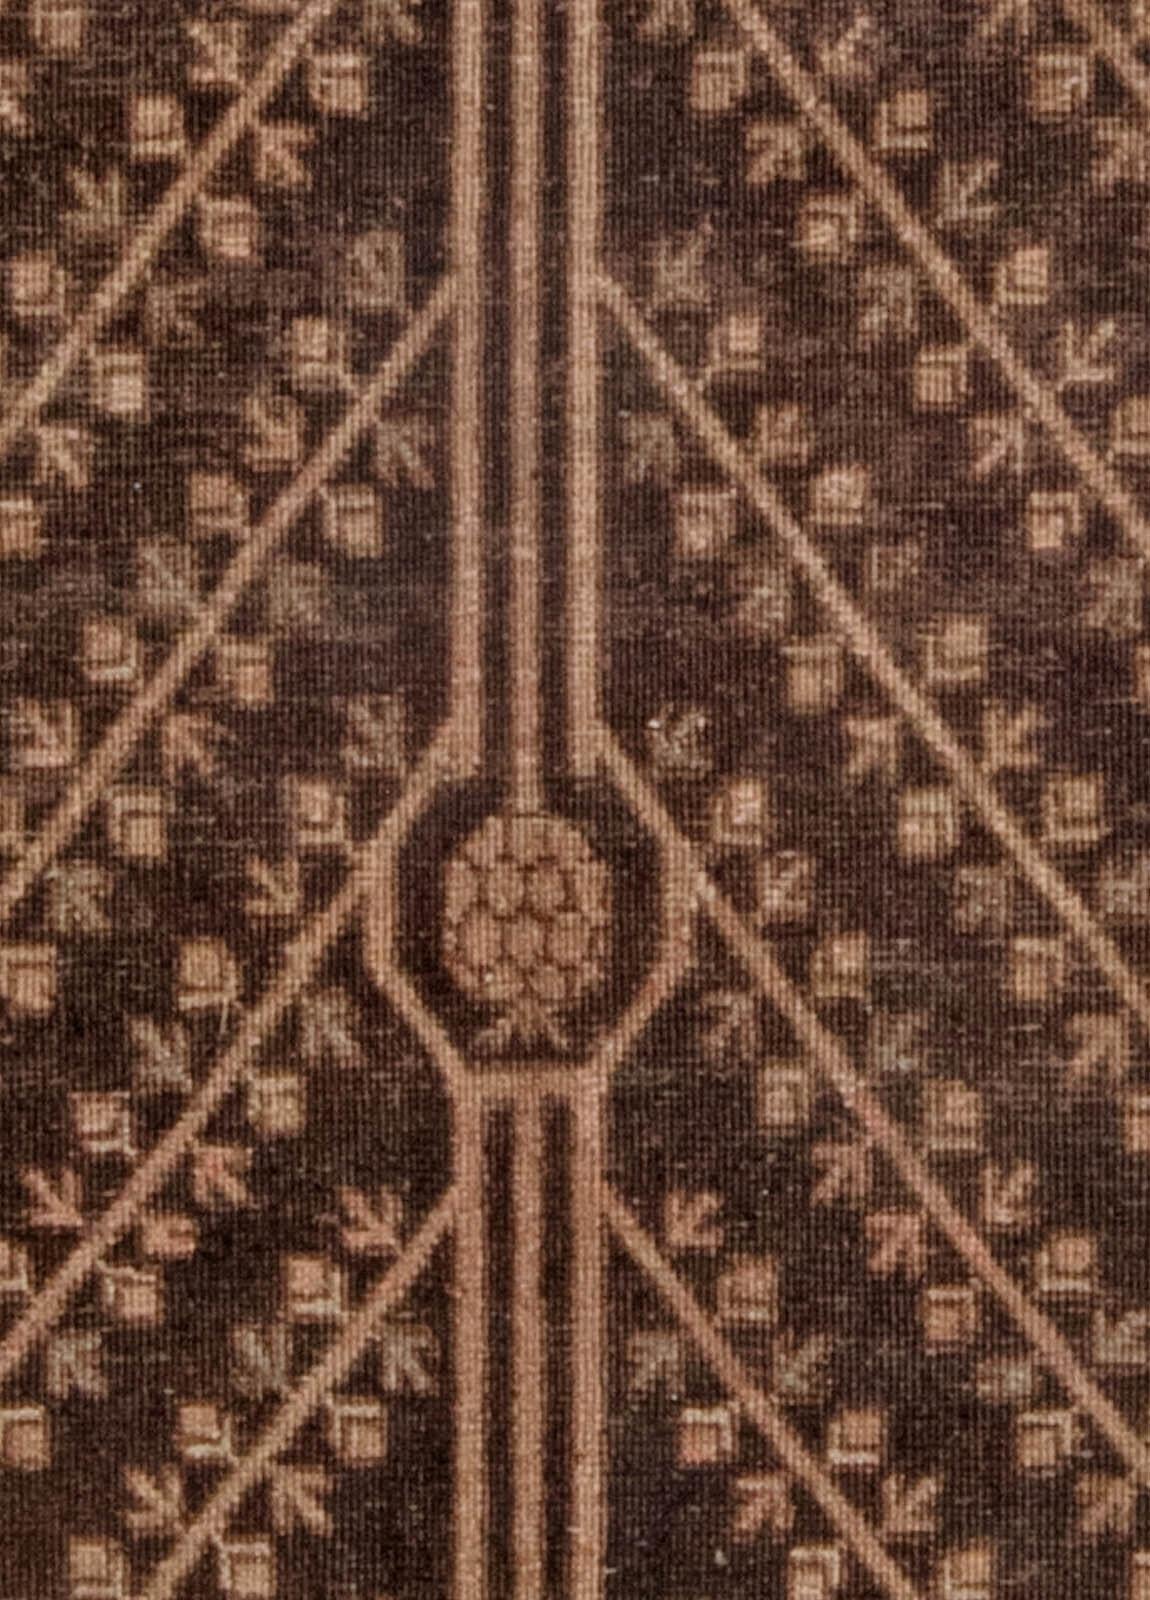 Mi-20th century Samarkand brown, beige, pink handmade wool rug by Doris Leslie Blau
Size: 5'10